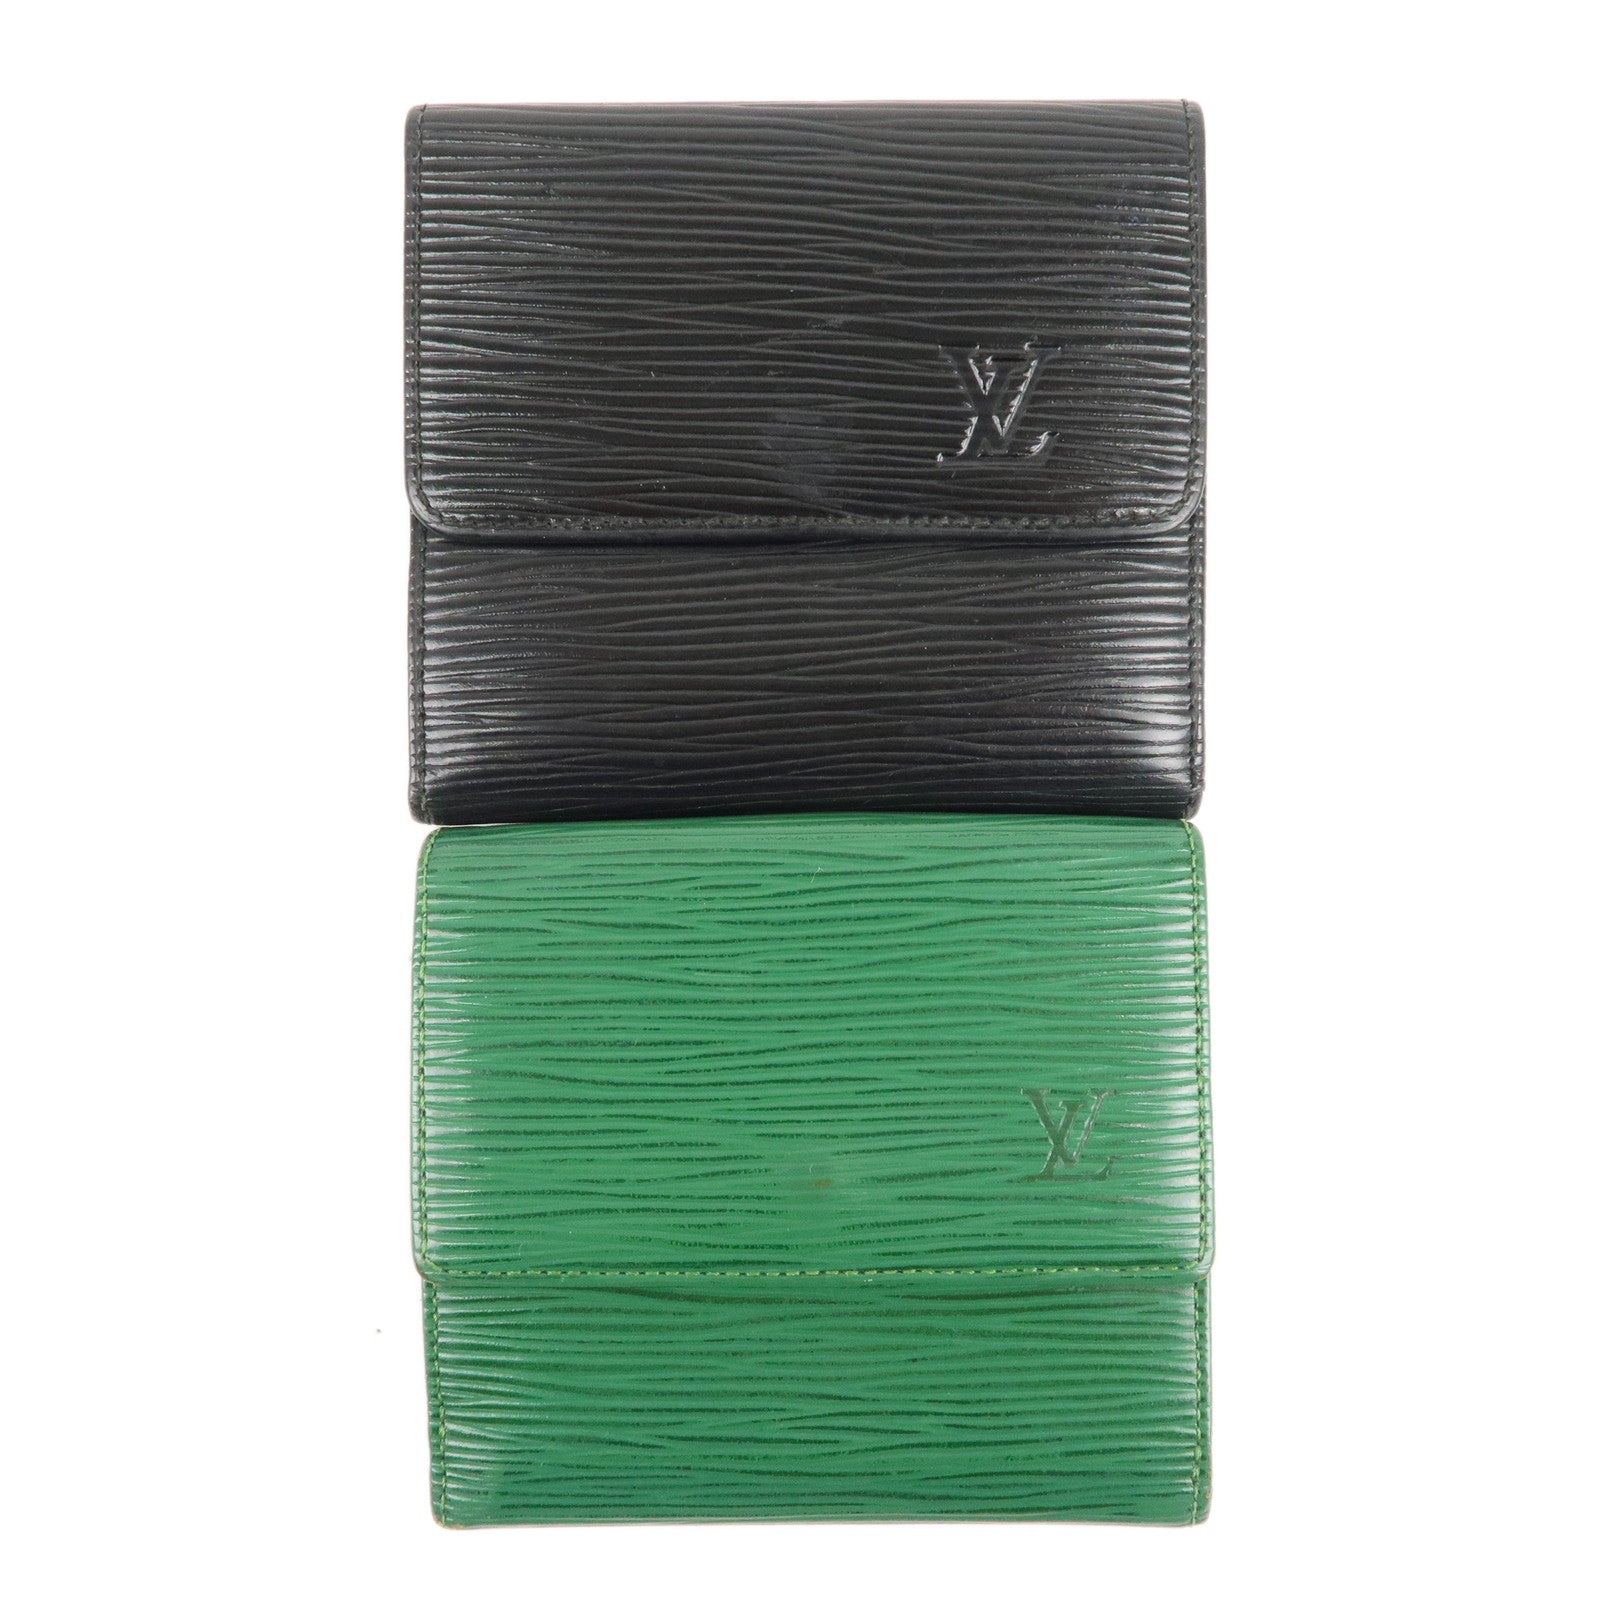 Louis-Vuitton-Epi-Set-of-2-Double-Hook-Wallet-Borneo-Green-Black